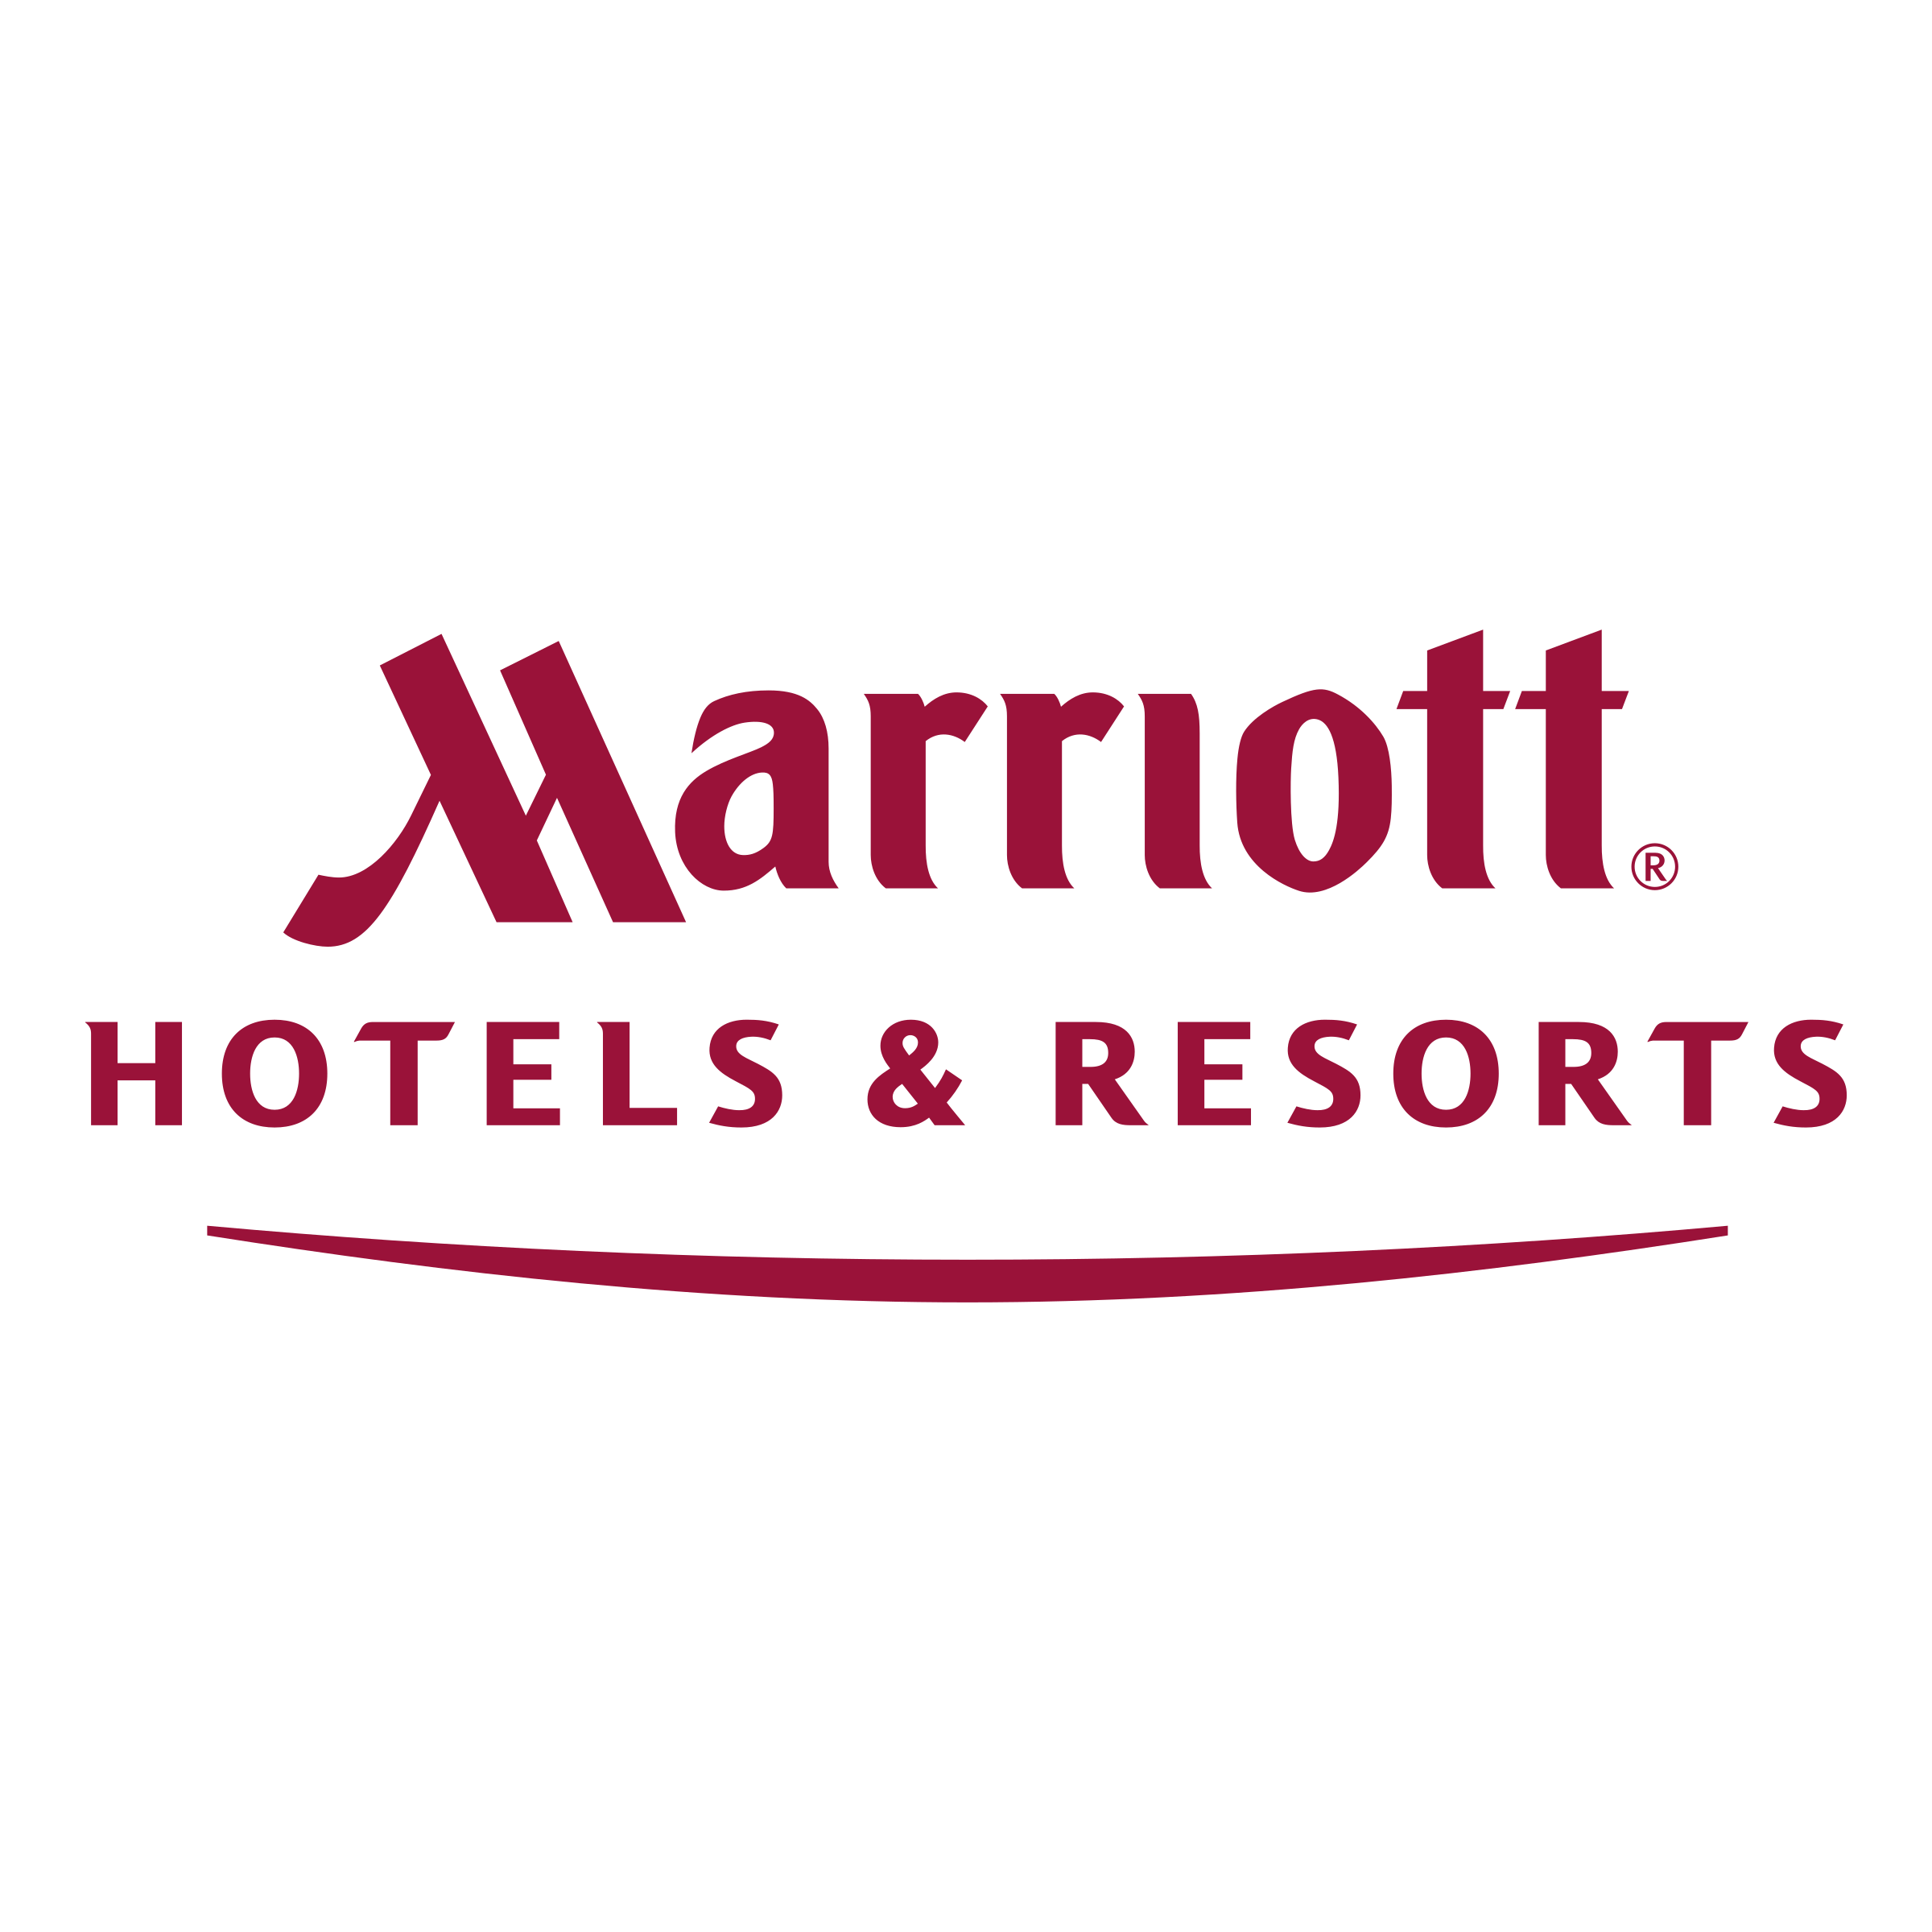 marriott-hotels-resorts-logo-png-transparent.png